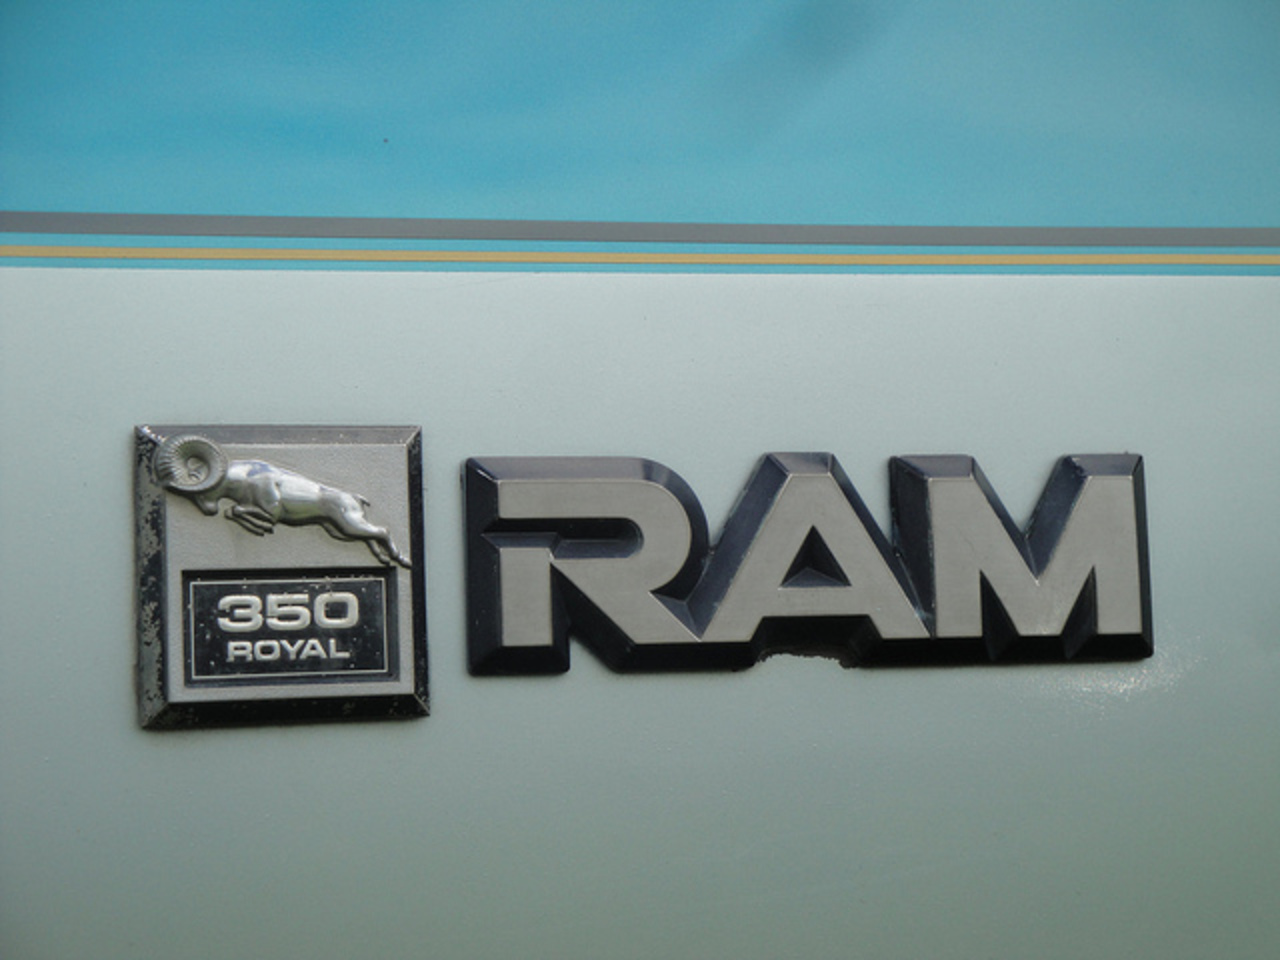 Dodge Ram 350 Royal | Flickr - Photo Sharing!